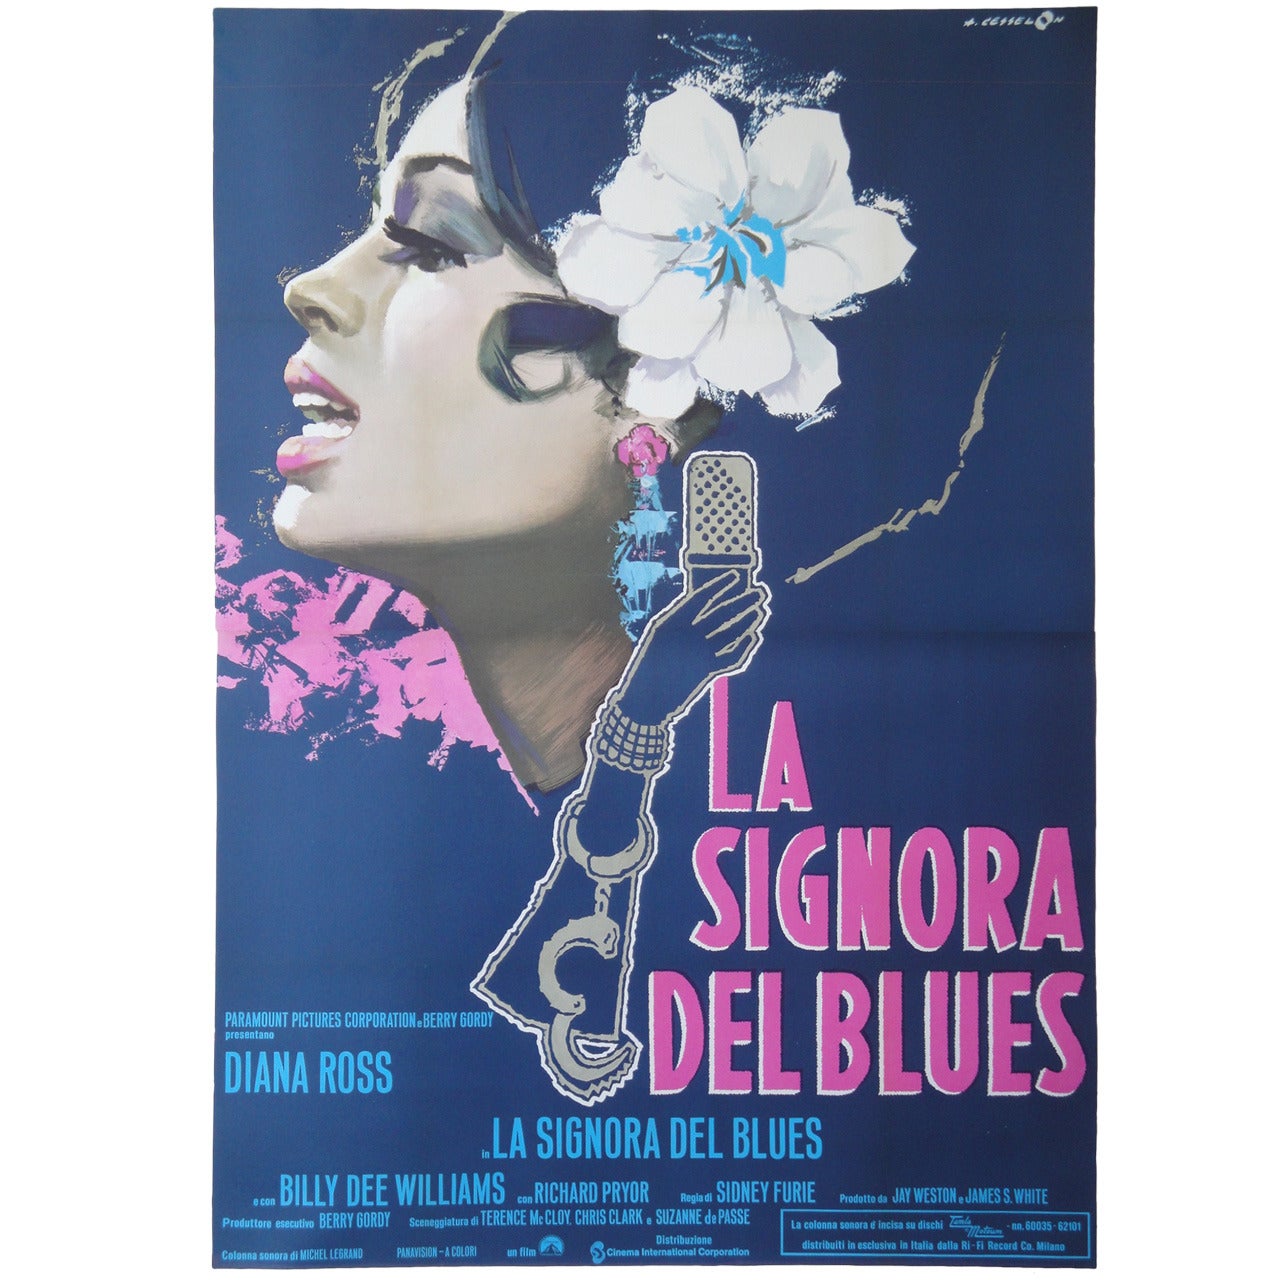 Extremely Rare Diana Ross "La Signora Del Blues" Italian Movie Poster